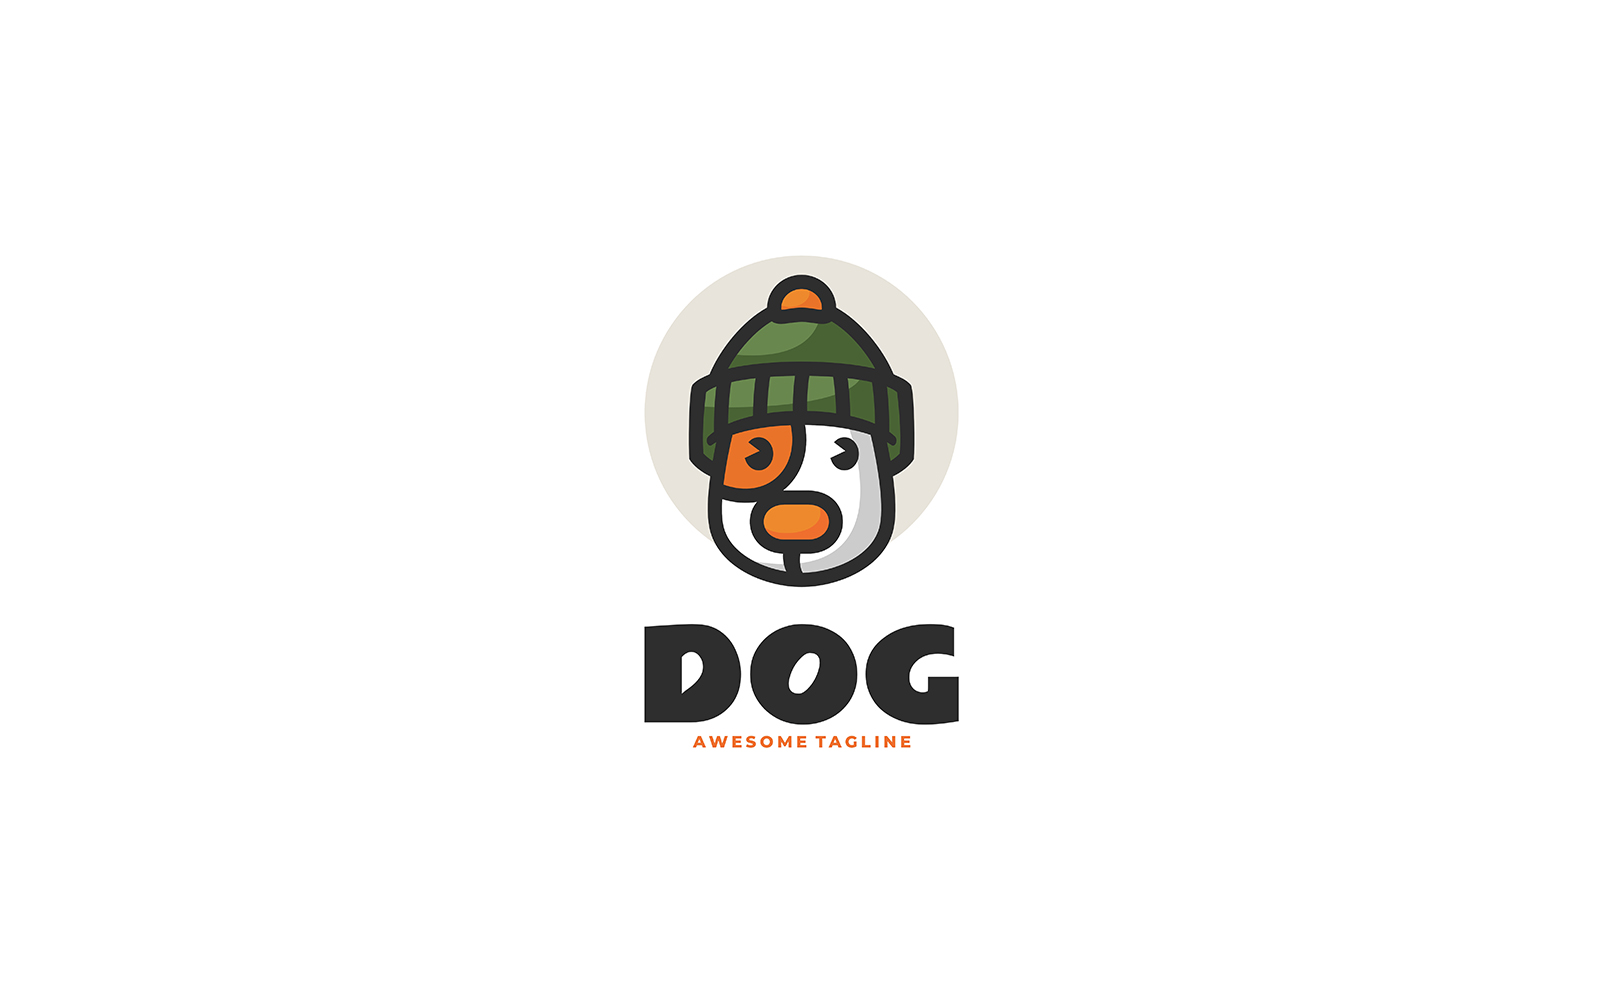 Dog Simple Mascot Logo Design 1